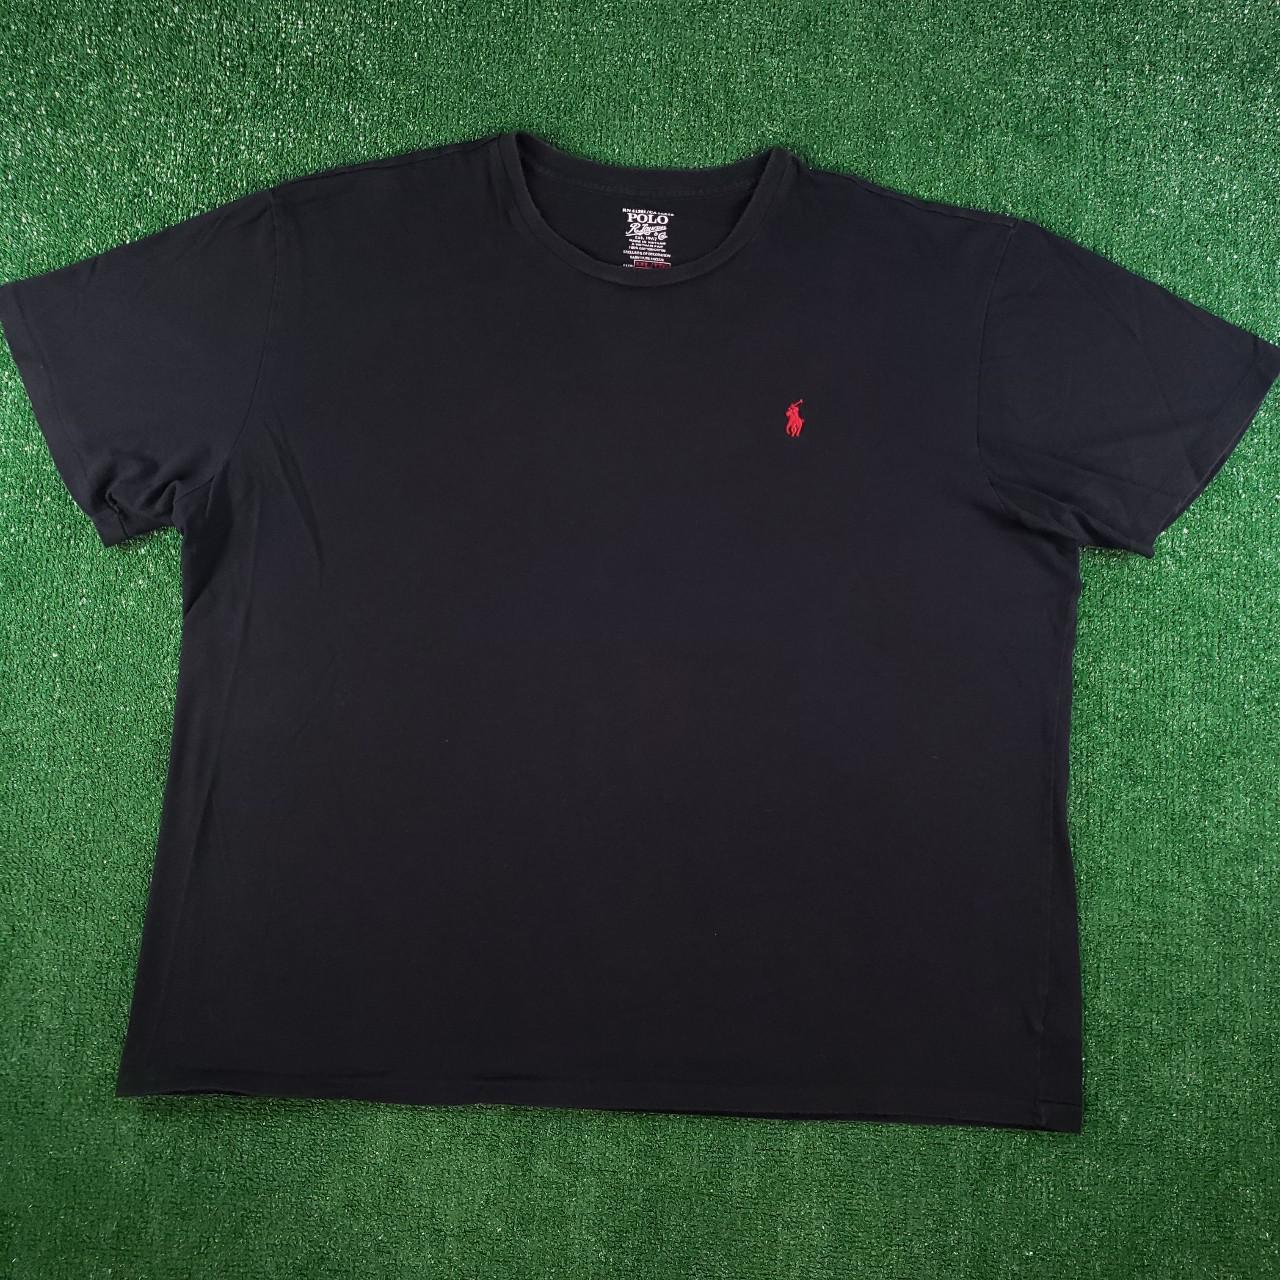 Polo Ralph Lauren Men's Black and Red T-shirt | Depop